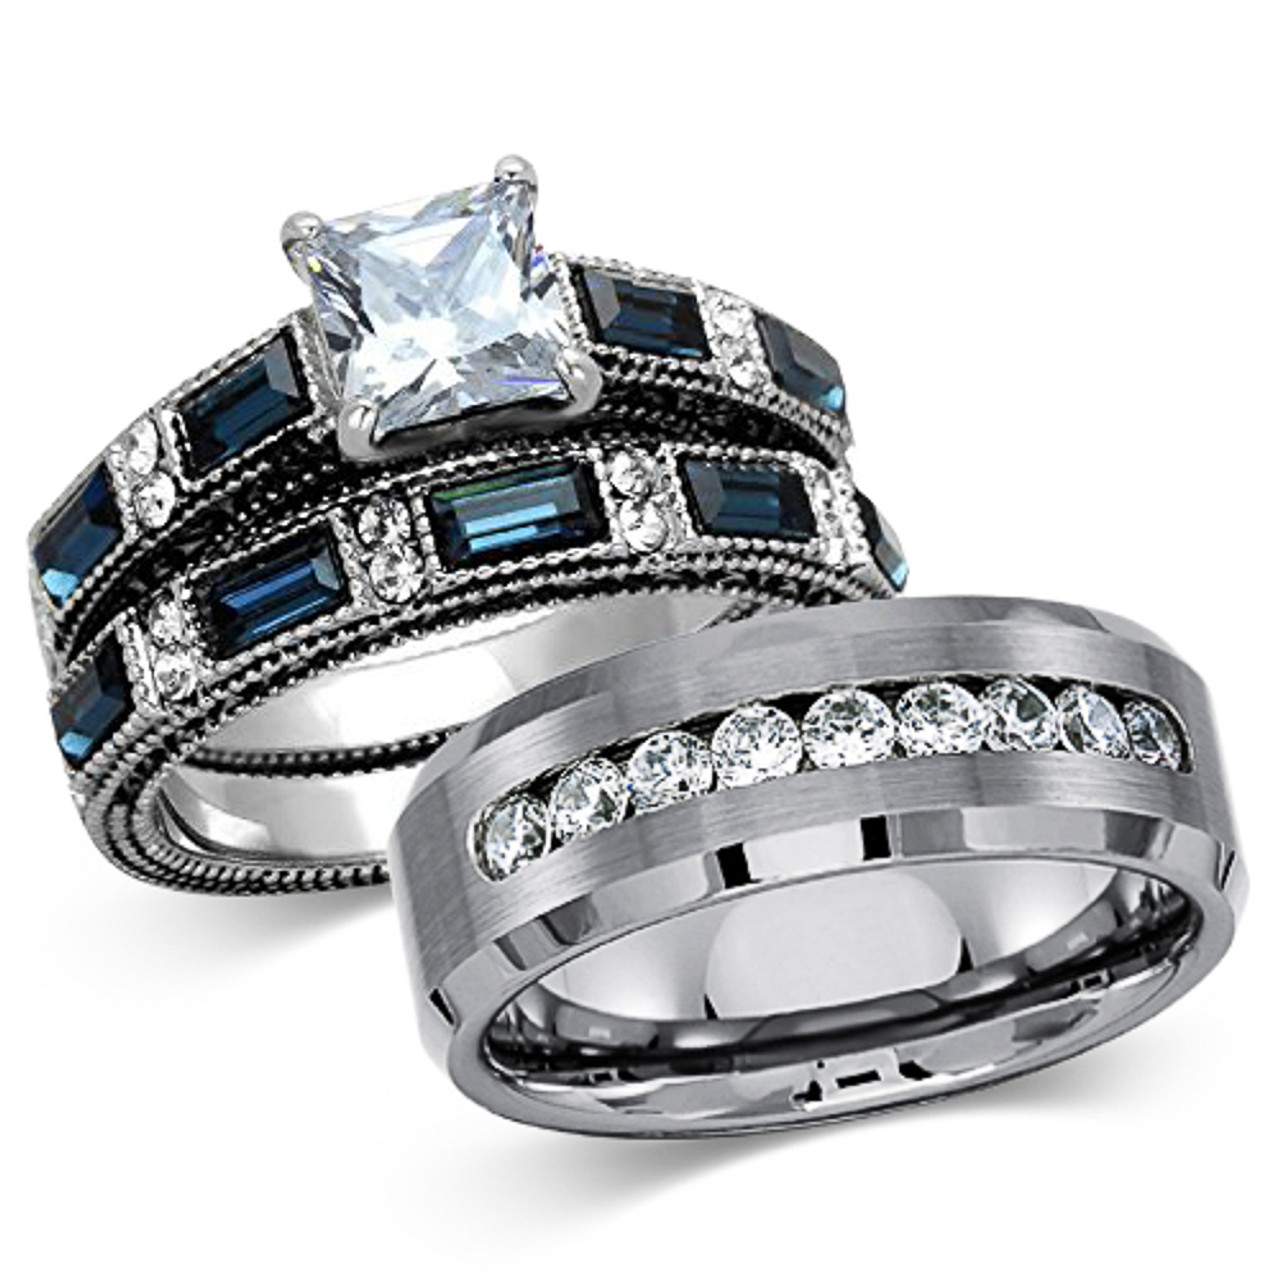 Wedding Ring Simple Stainless Steel Light Surface 6mm Arc Titanium